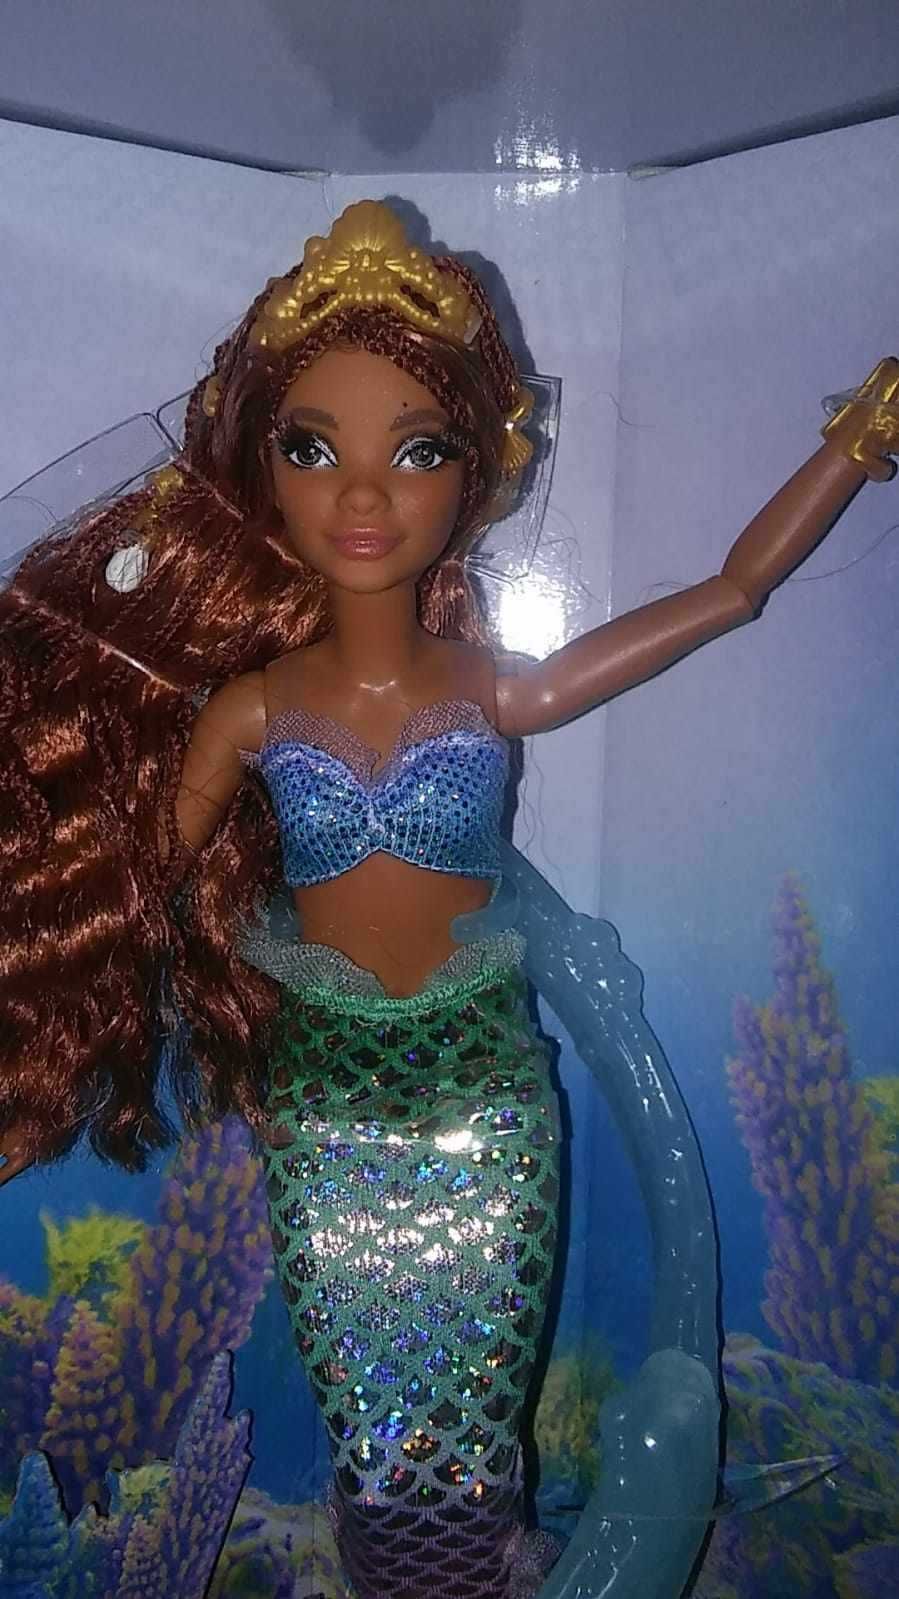 Nowa Lalka Mała Syrenka Arielka Disney Deluxe Mattel kolekcjonerska